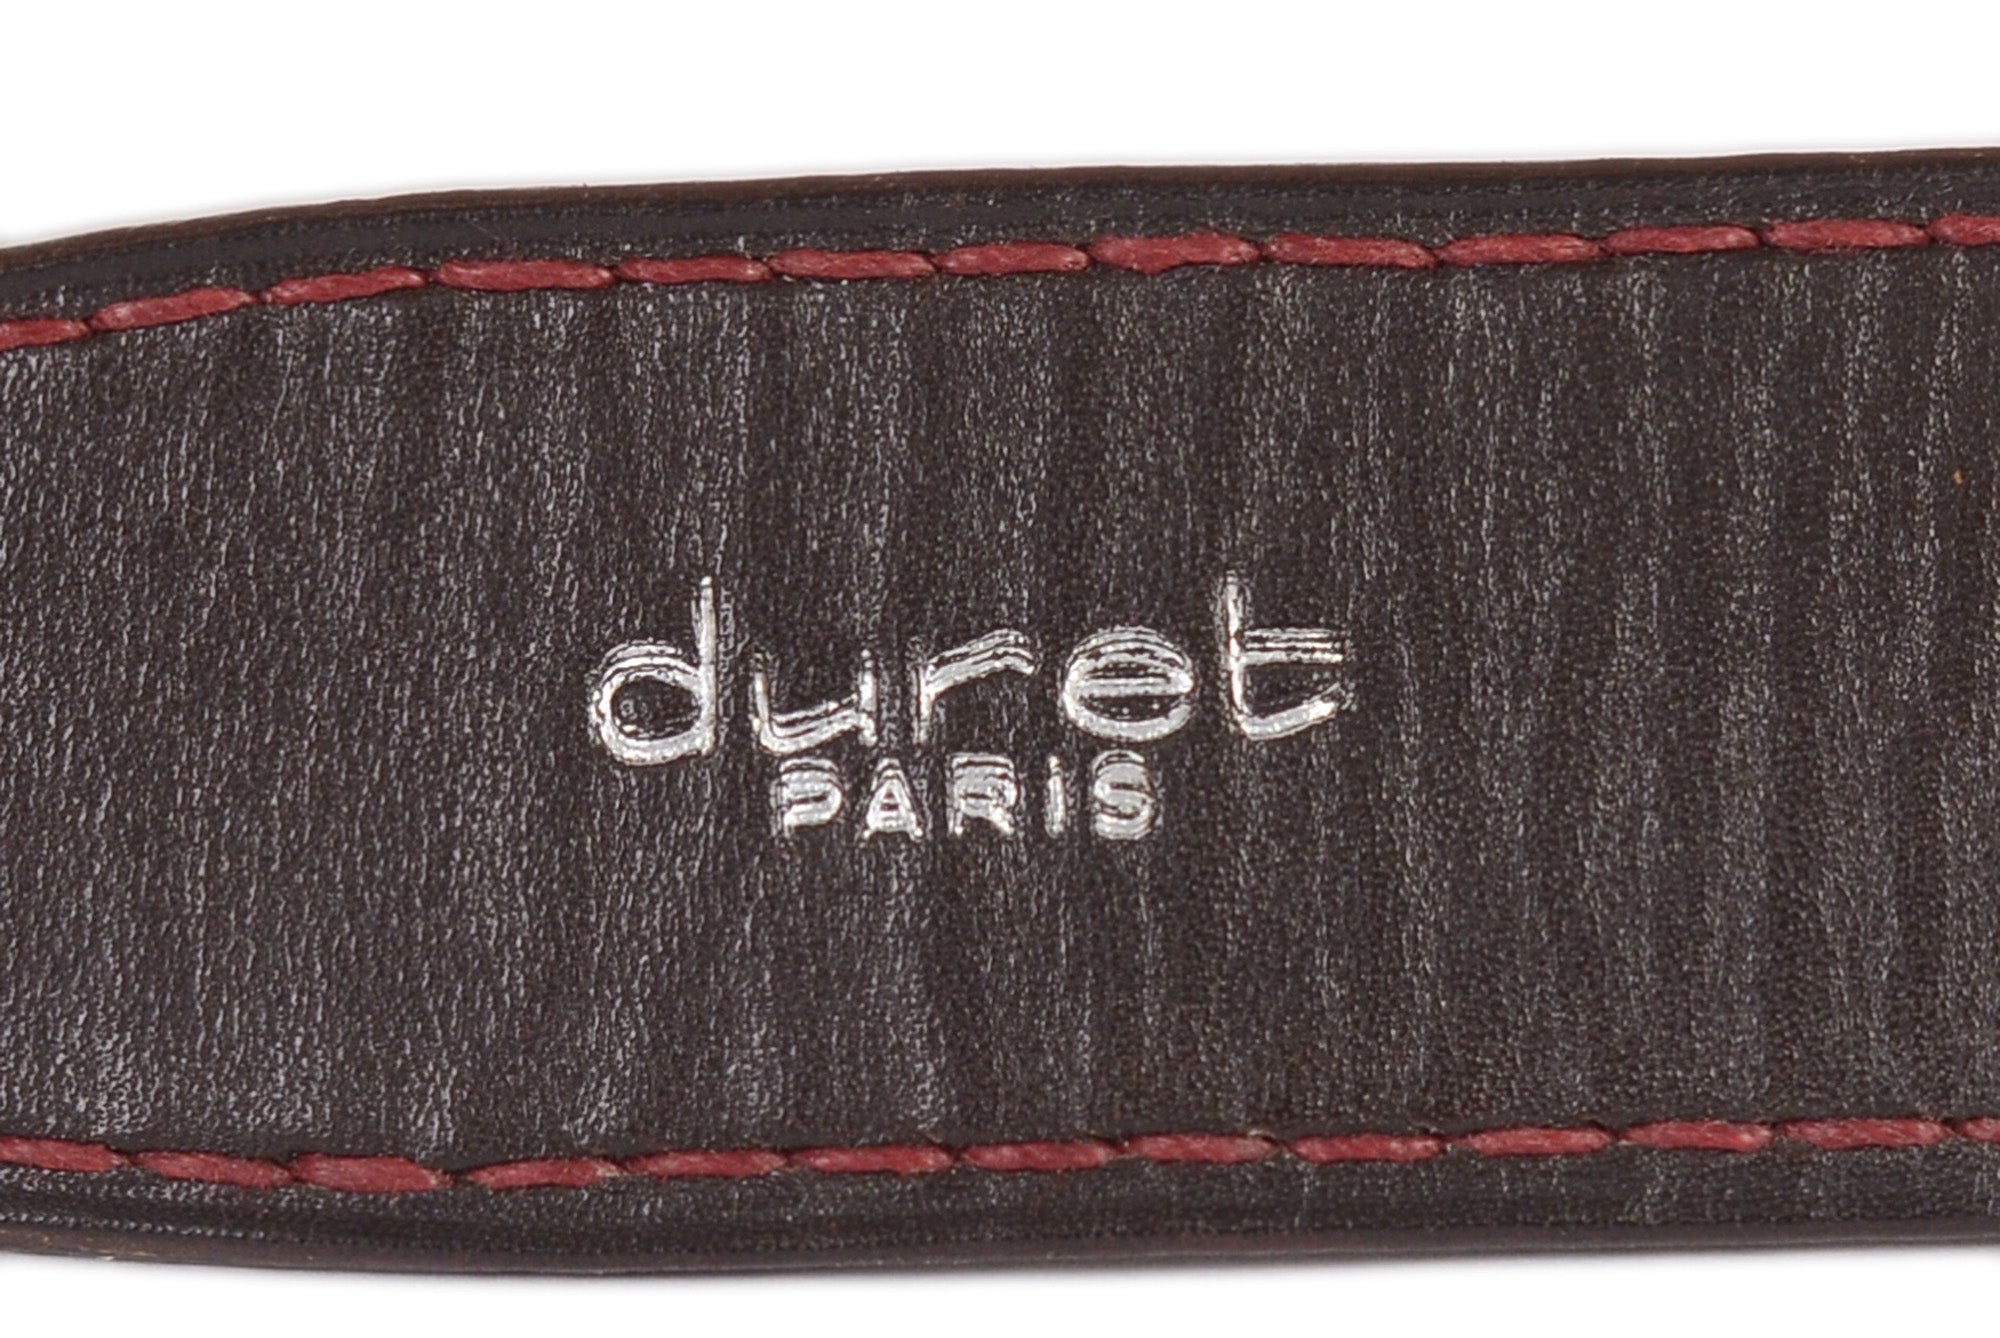 DURET Burgundy Crocodile Leather Belt with Gold-Tone Square Buckle 35" NEW 90cm DURET